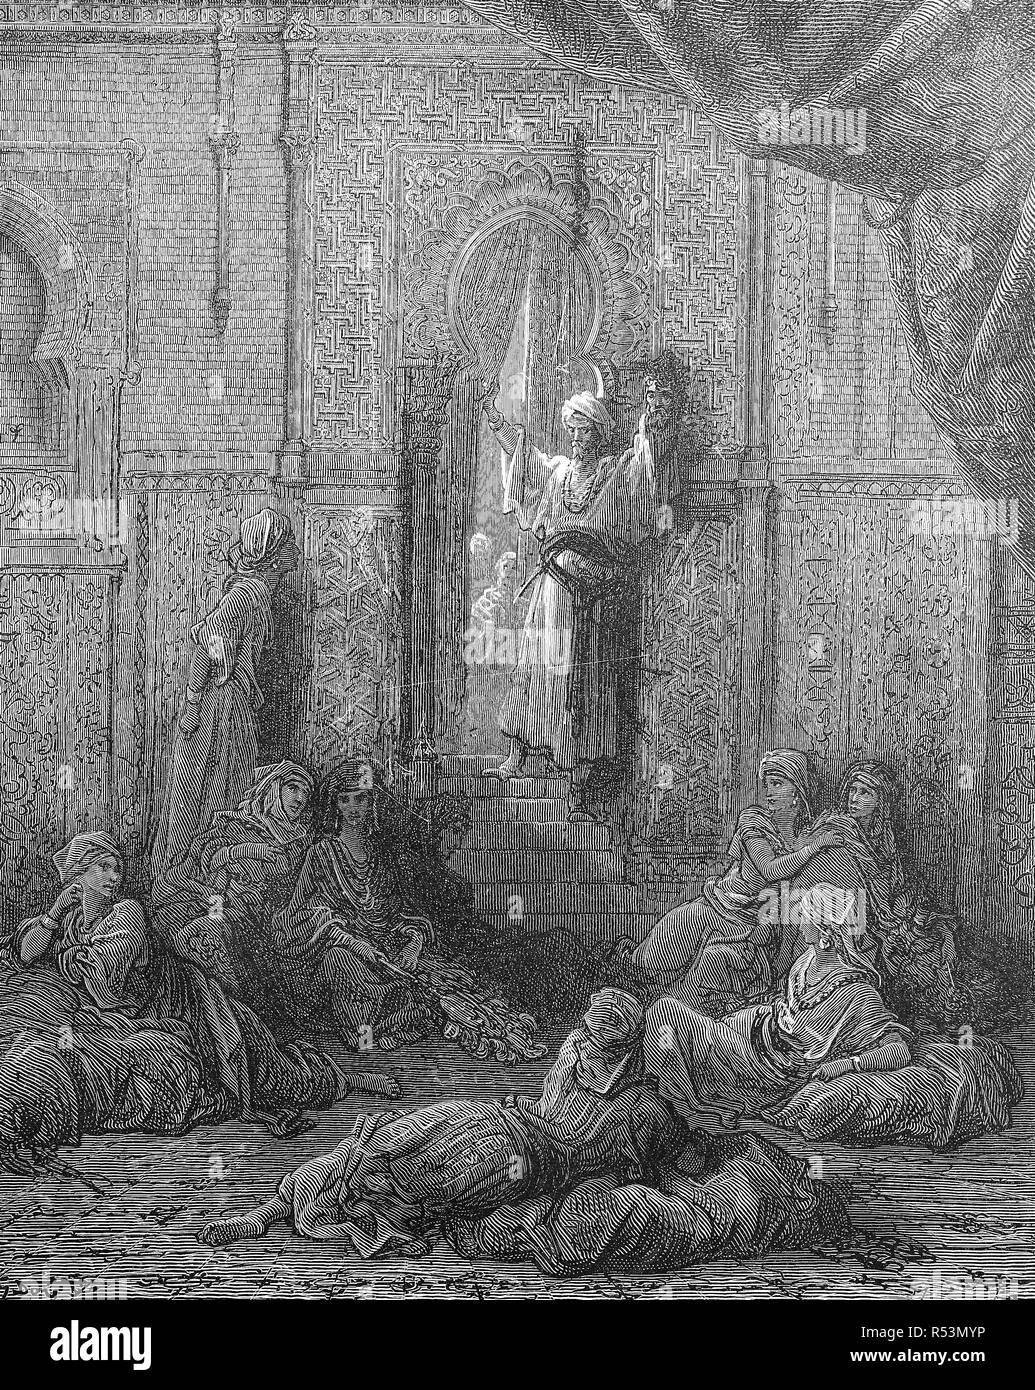 Digital improved reproduction, the head of the Emir is shown in the Serail, fourth crusade, Der Kopf des Emirs wird im Serail gezeigt, vierter Kreuzzug, original print from the 19th century Stock Photo